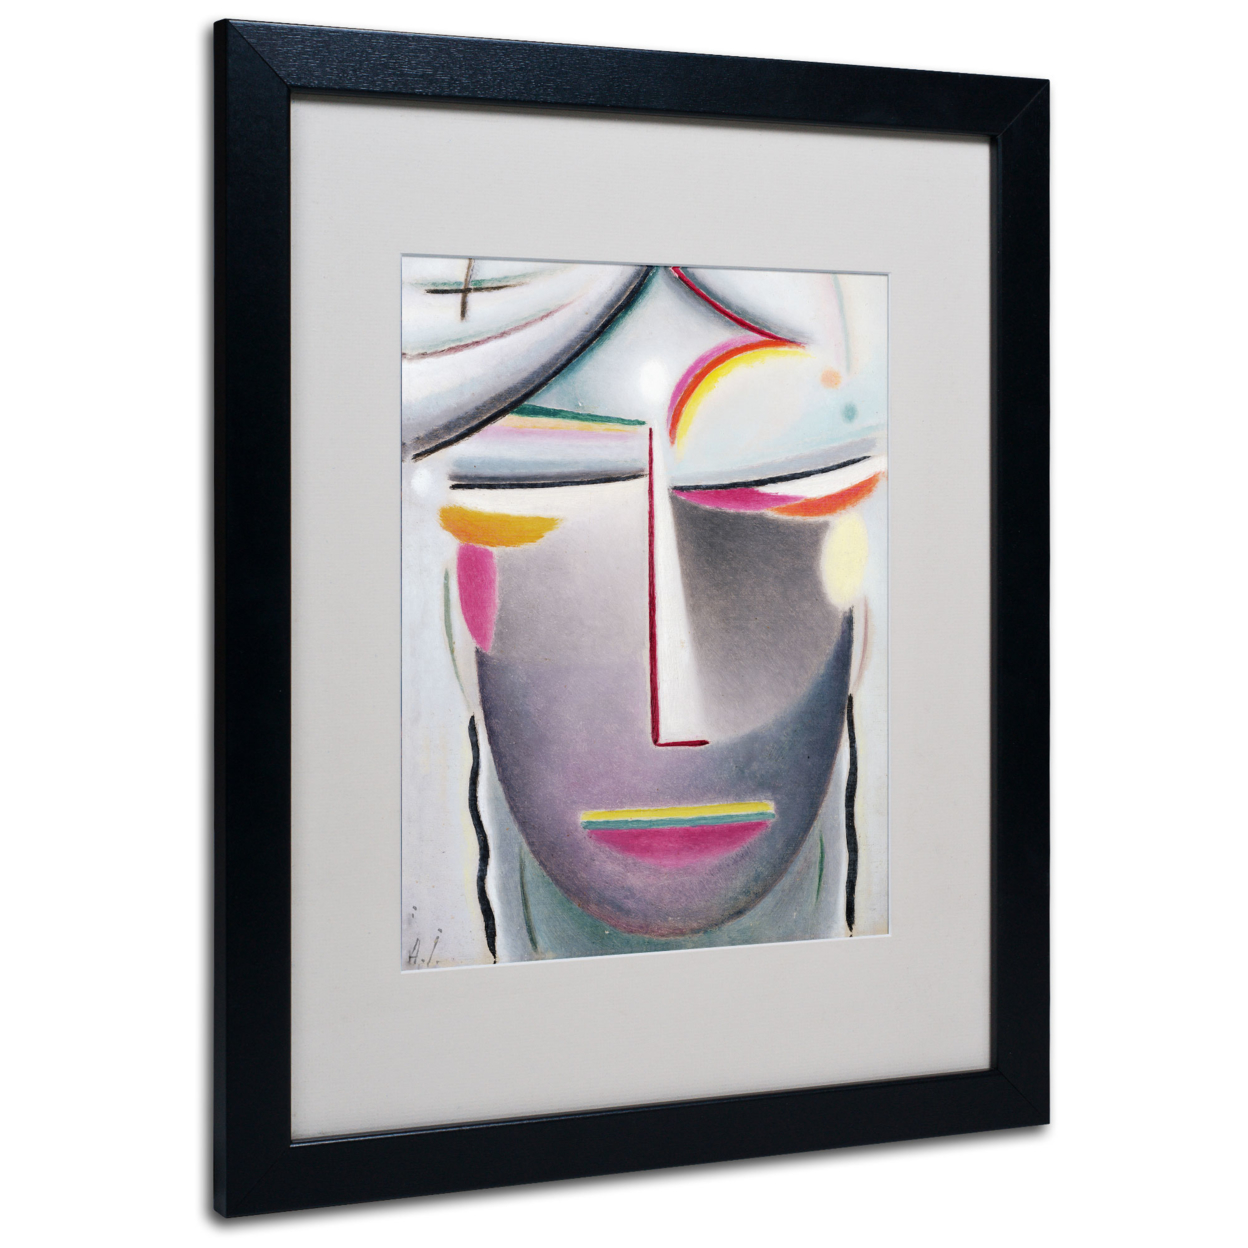 Alexej Von Jawlensky 'Head (Dark Buddha)' Black Wooden Framed Art 18 X 22 Inches